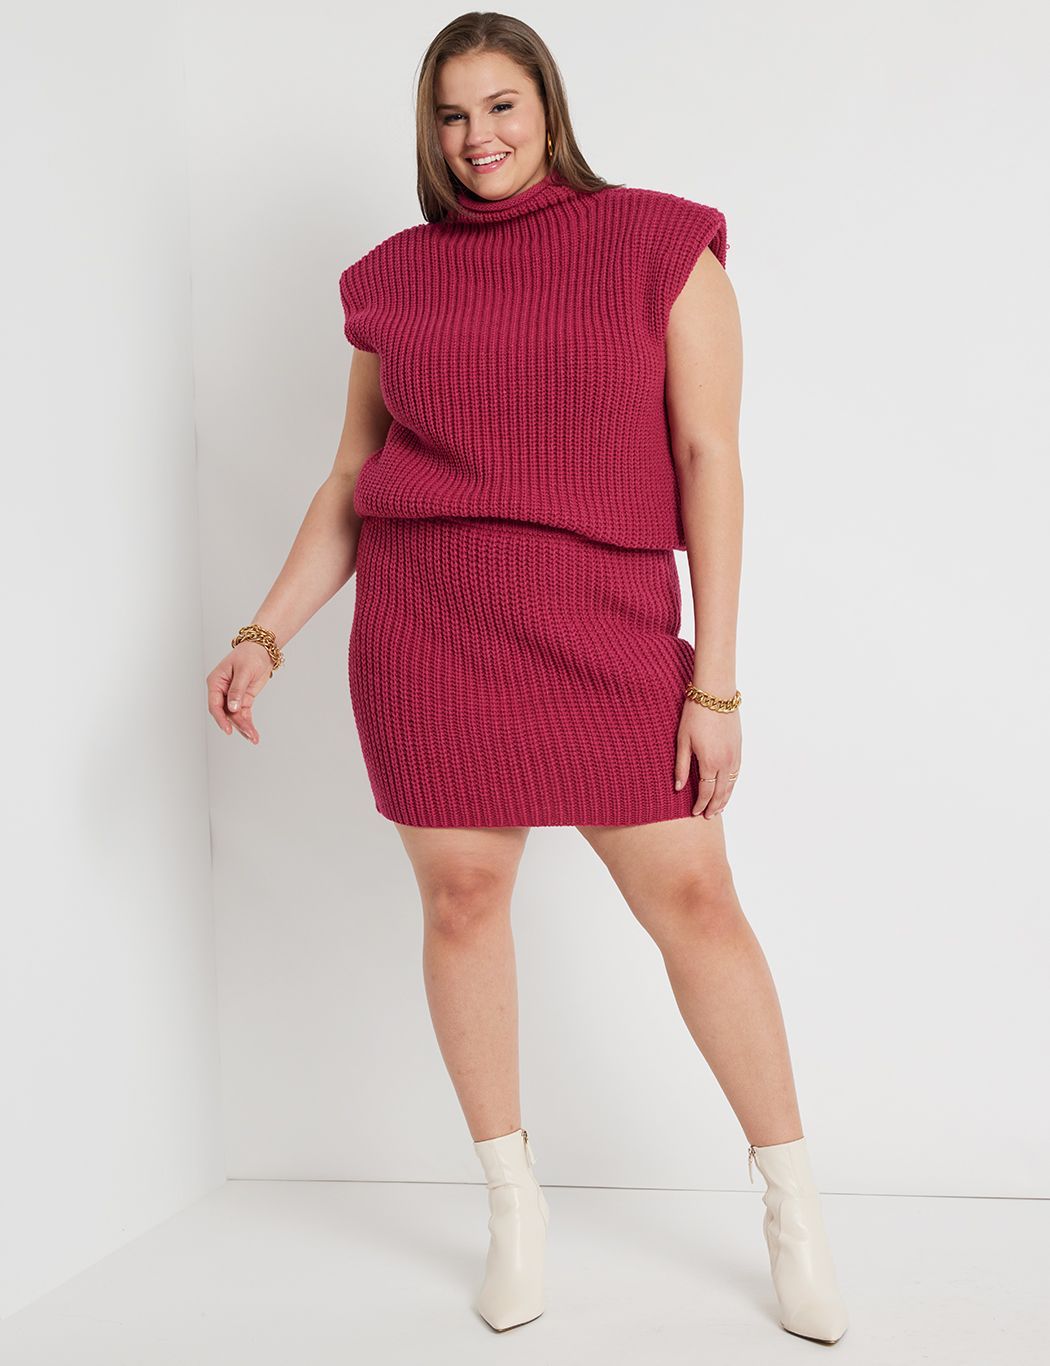 Sweater Mini Skirt | Women's Plus Size Skirts | ELOQUII | Eloquii